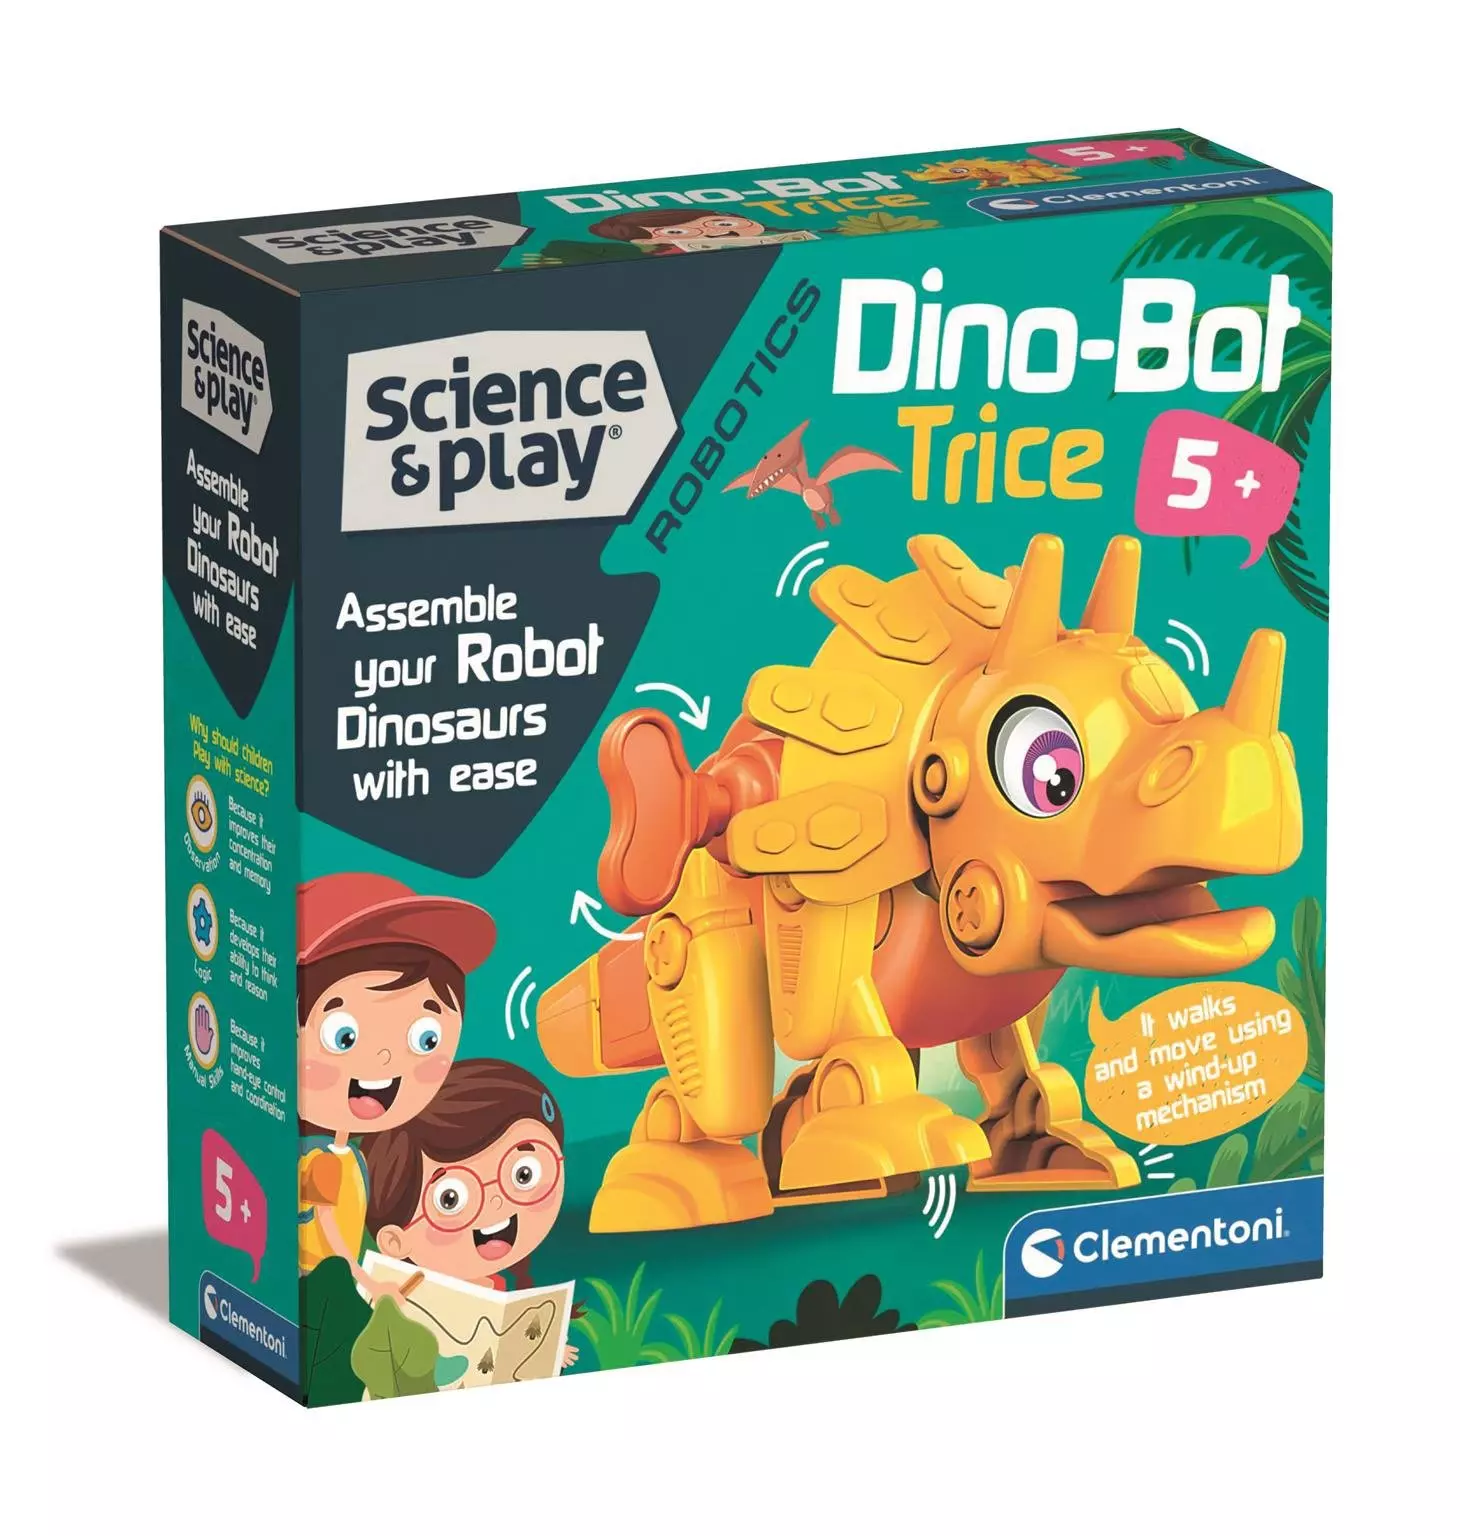 Clementoni Scienceplay Dinobot Trice 75074